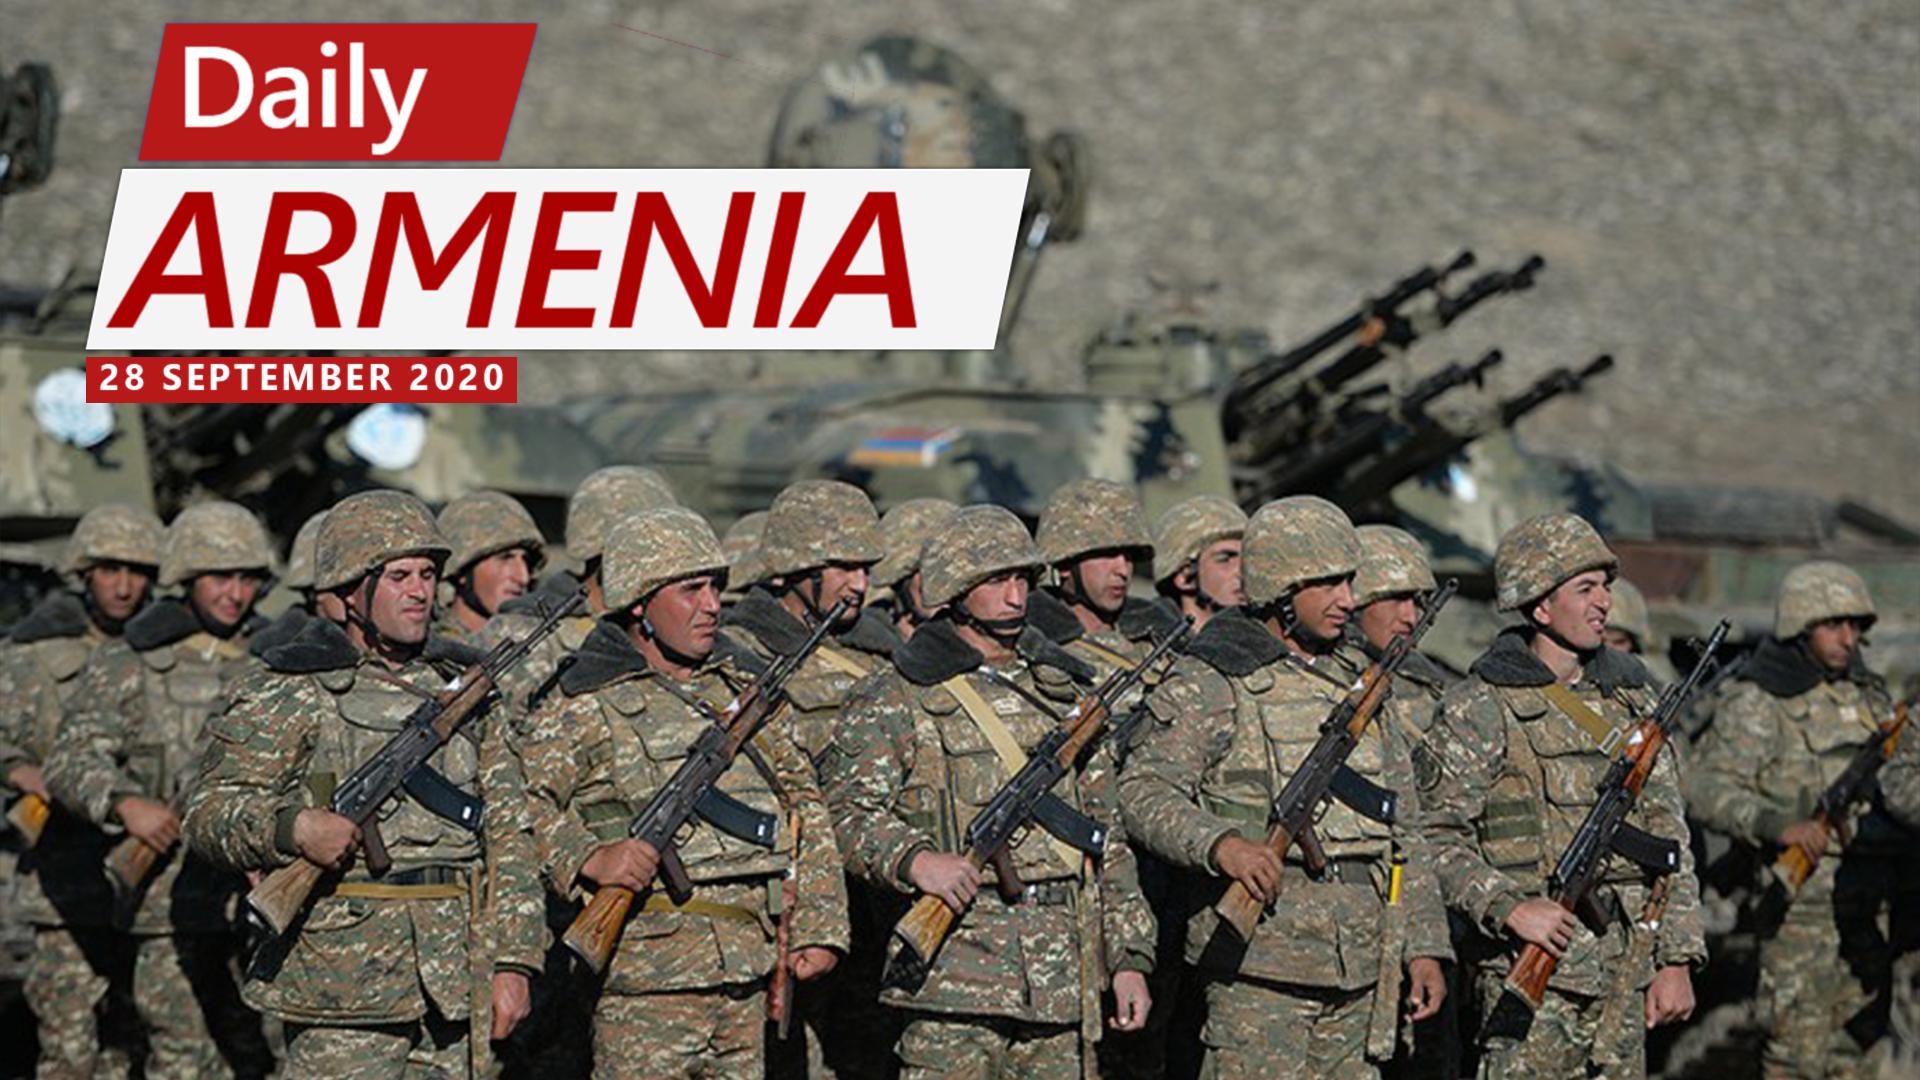 War Continues Between Armenia and Azerbaijan, Despite International Calls to Cease Hostilities